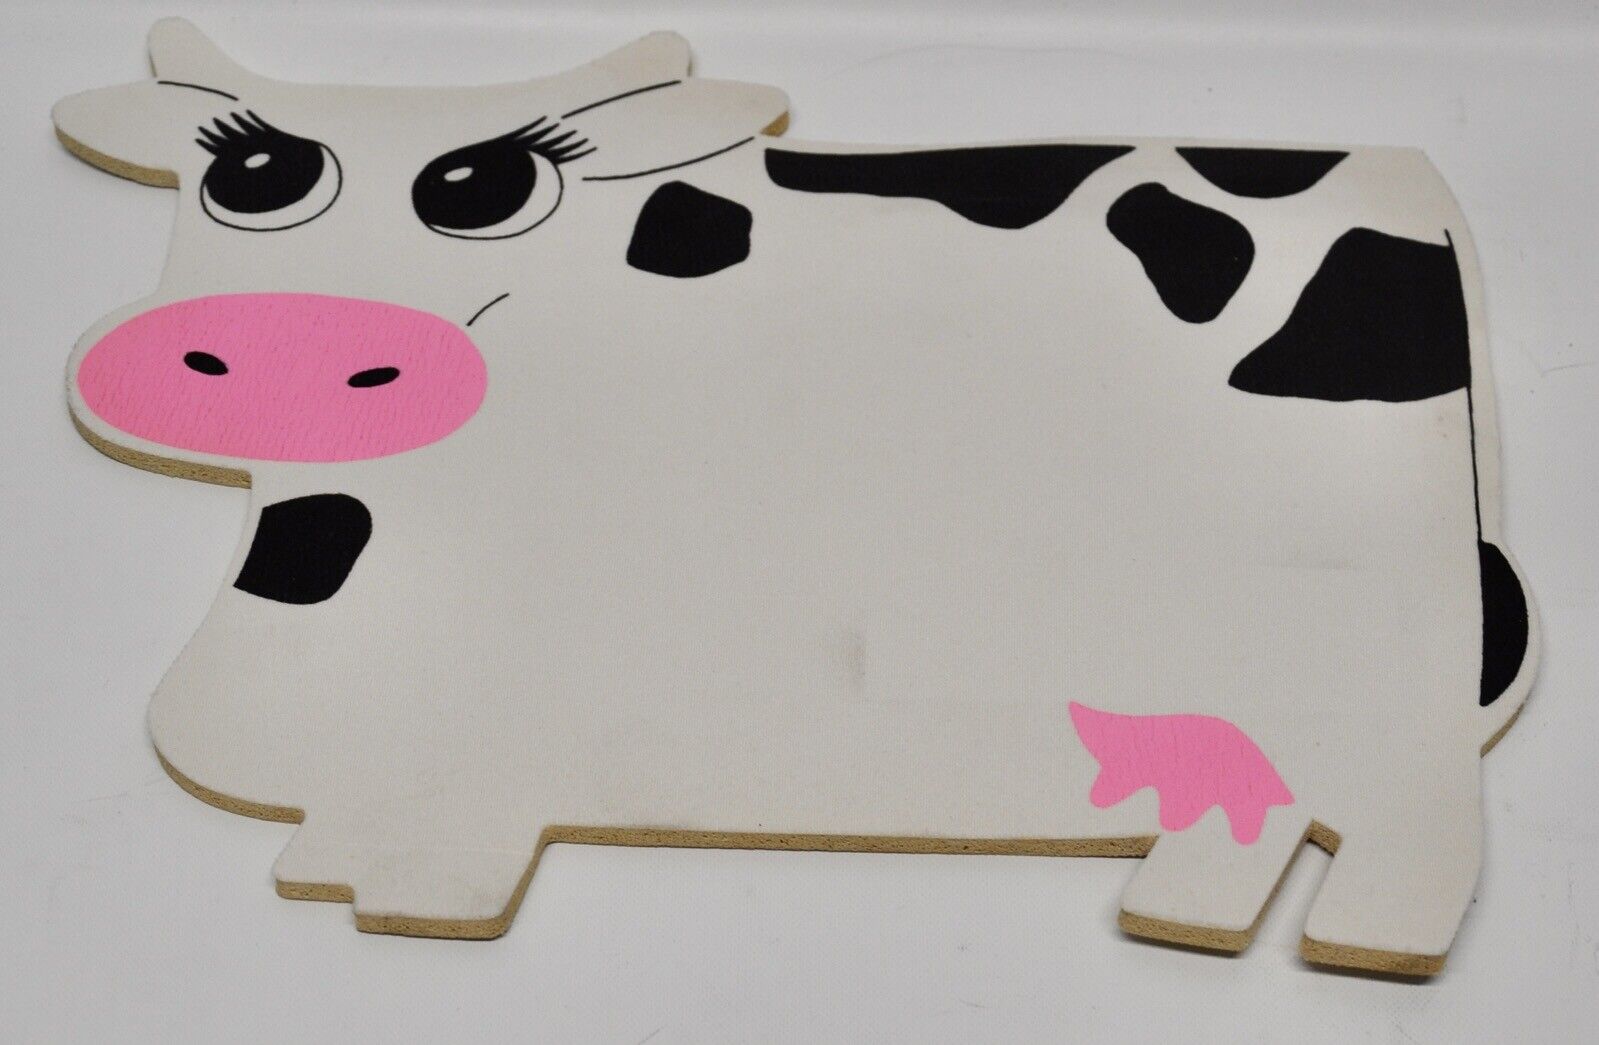 Vintage Mouse Pad: Animal Die-Cut Mouse Pad - Cow